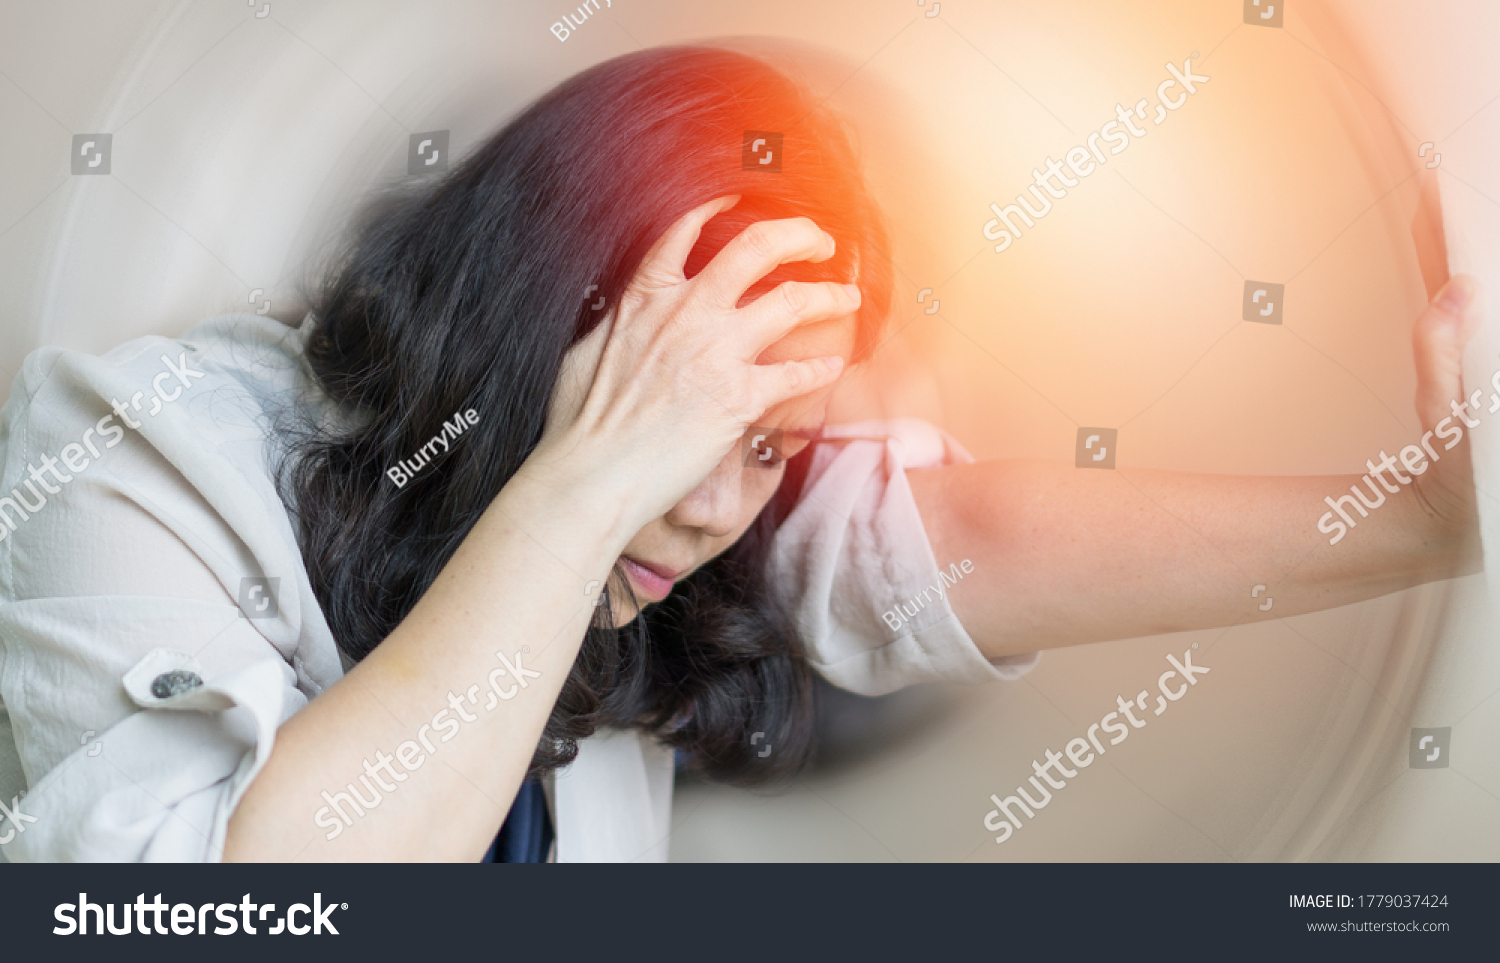 Vertigo illness concept. Woman hands on his head felling headache dizzy sense of spinning dizziness,a problem with the inner ear, brain, or sensory nerve pathway. #1779037424